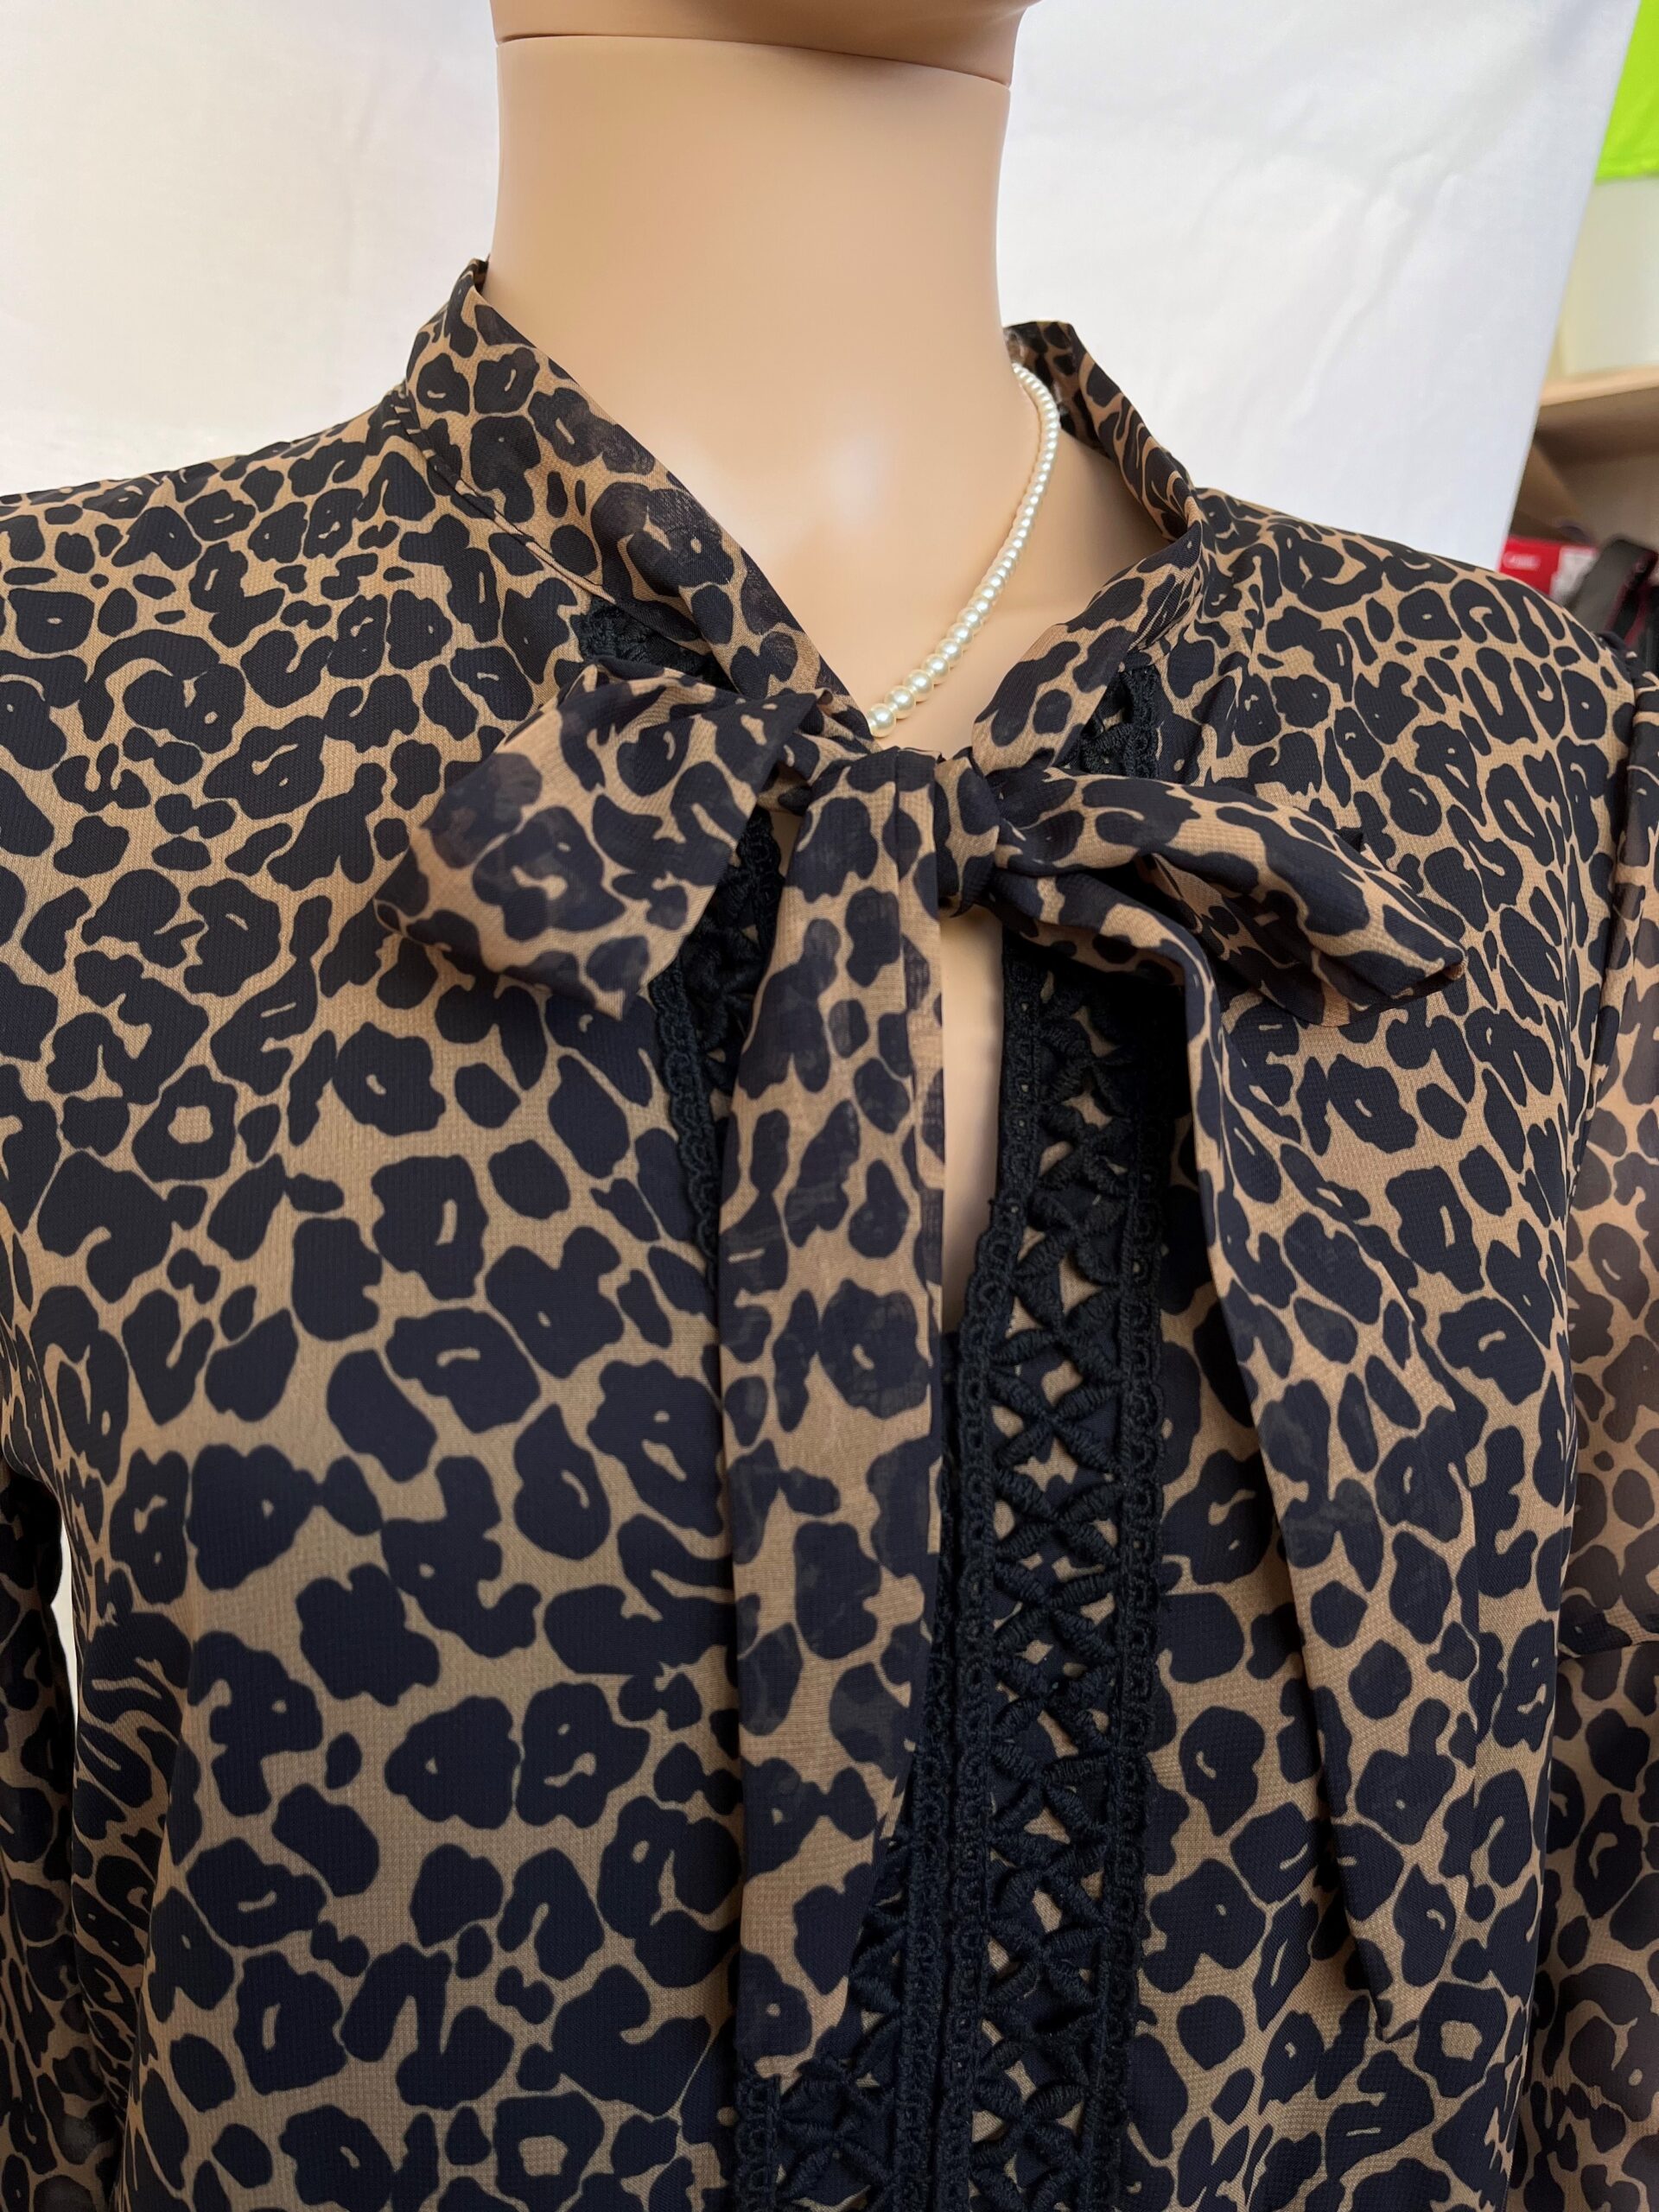 Lumina leopard print dress - Hope Cancer Support Centre